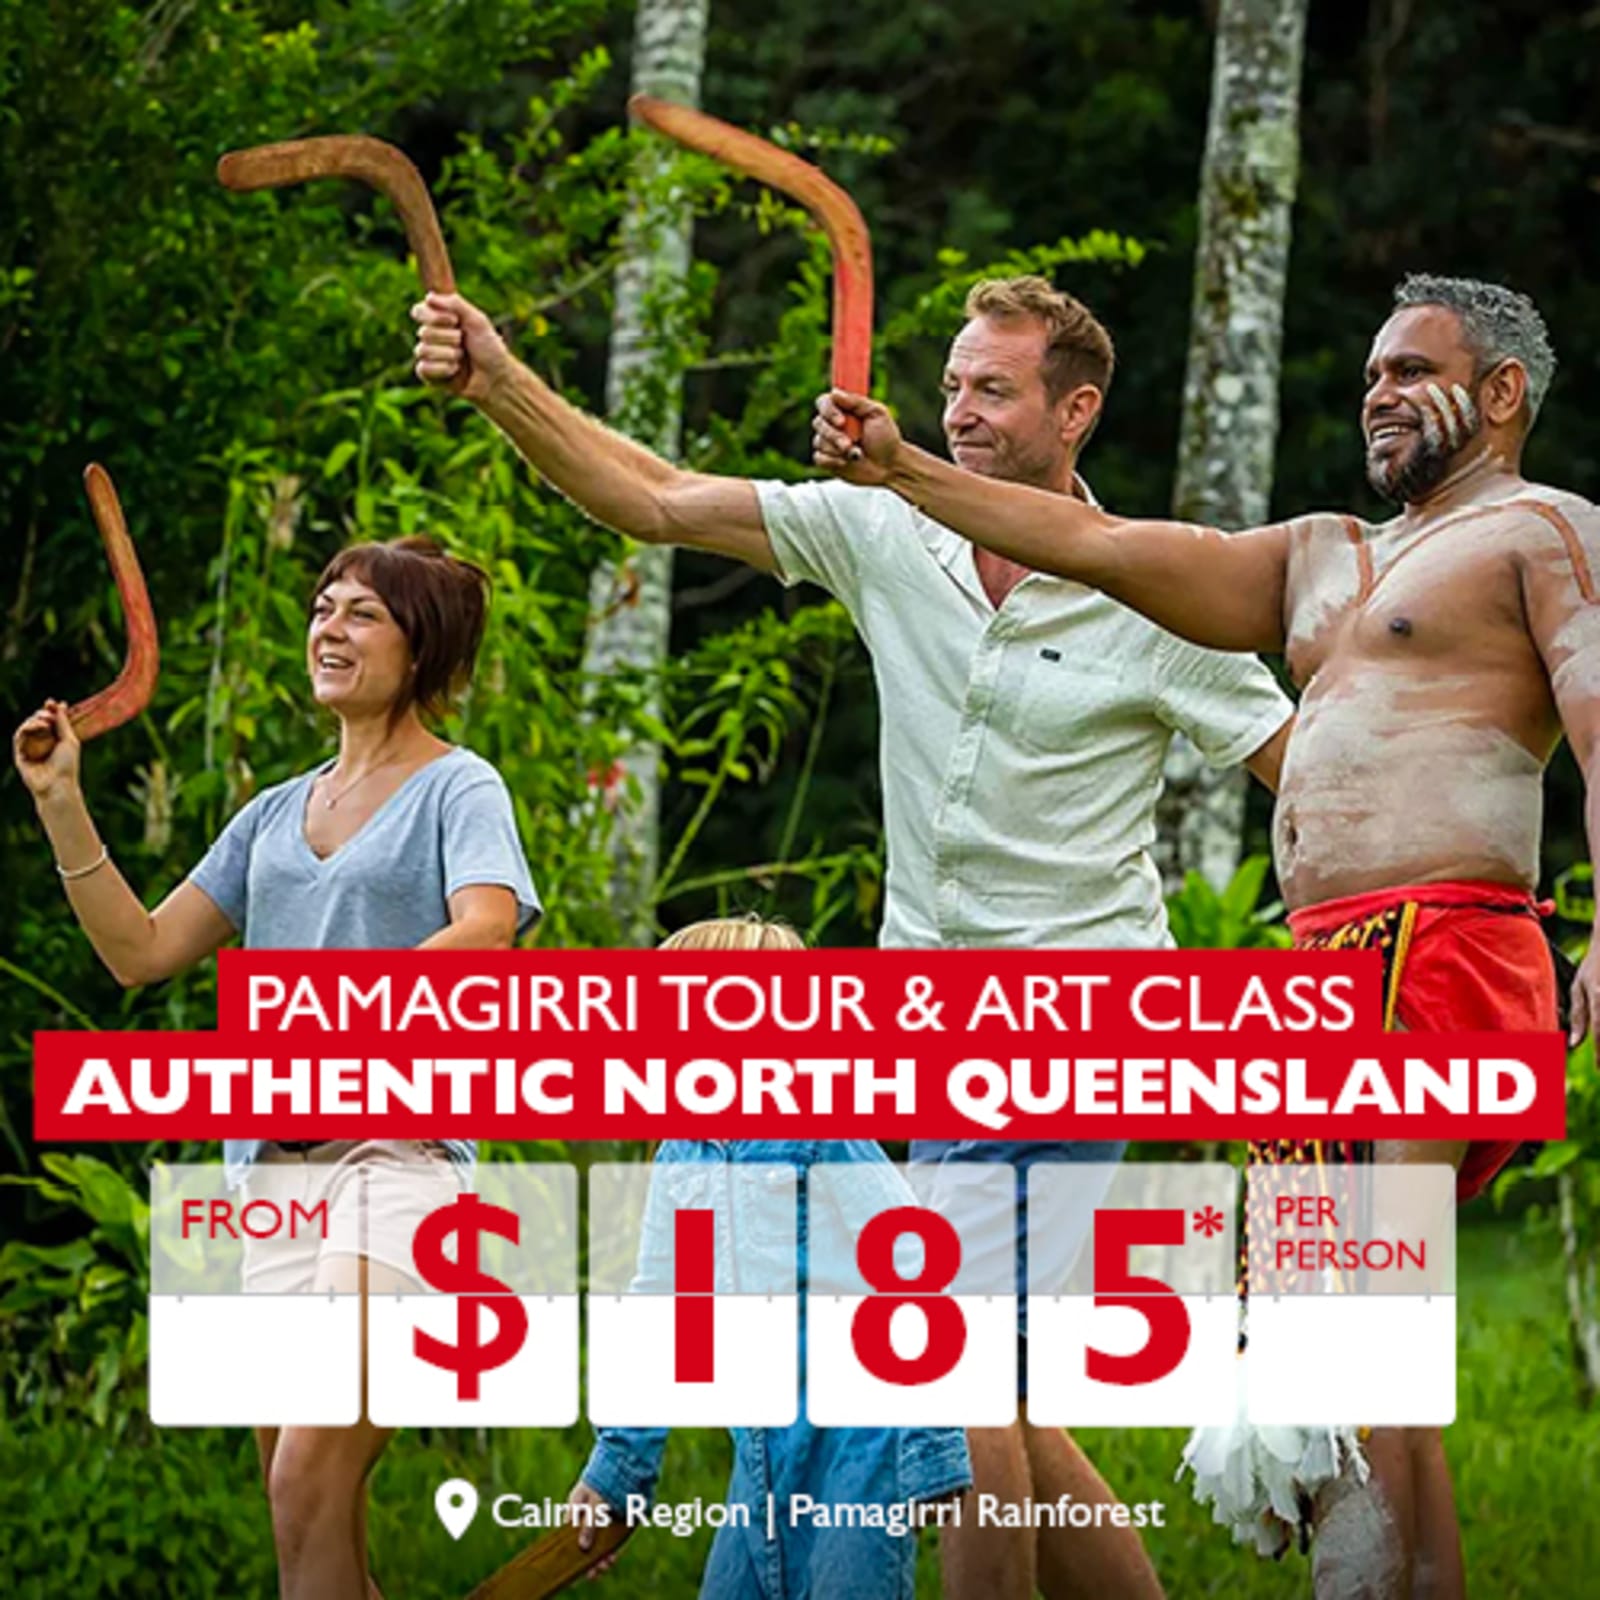 Pamagirri tour & art class | Authentic North Queensland from $185* per person